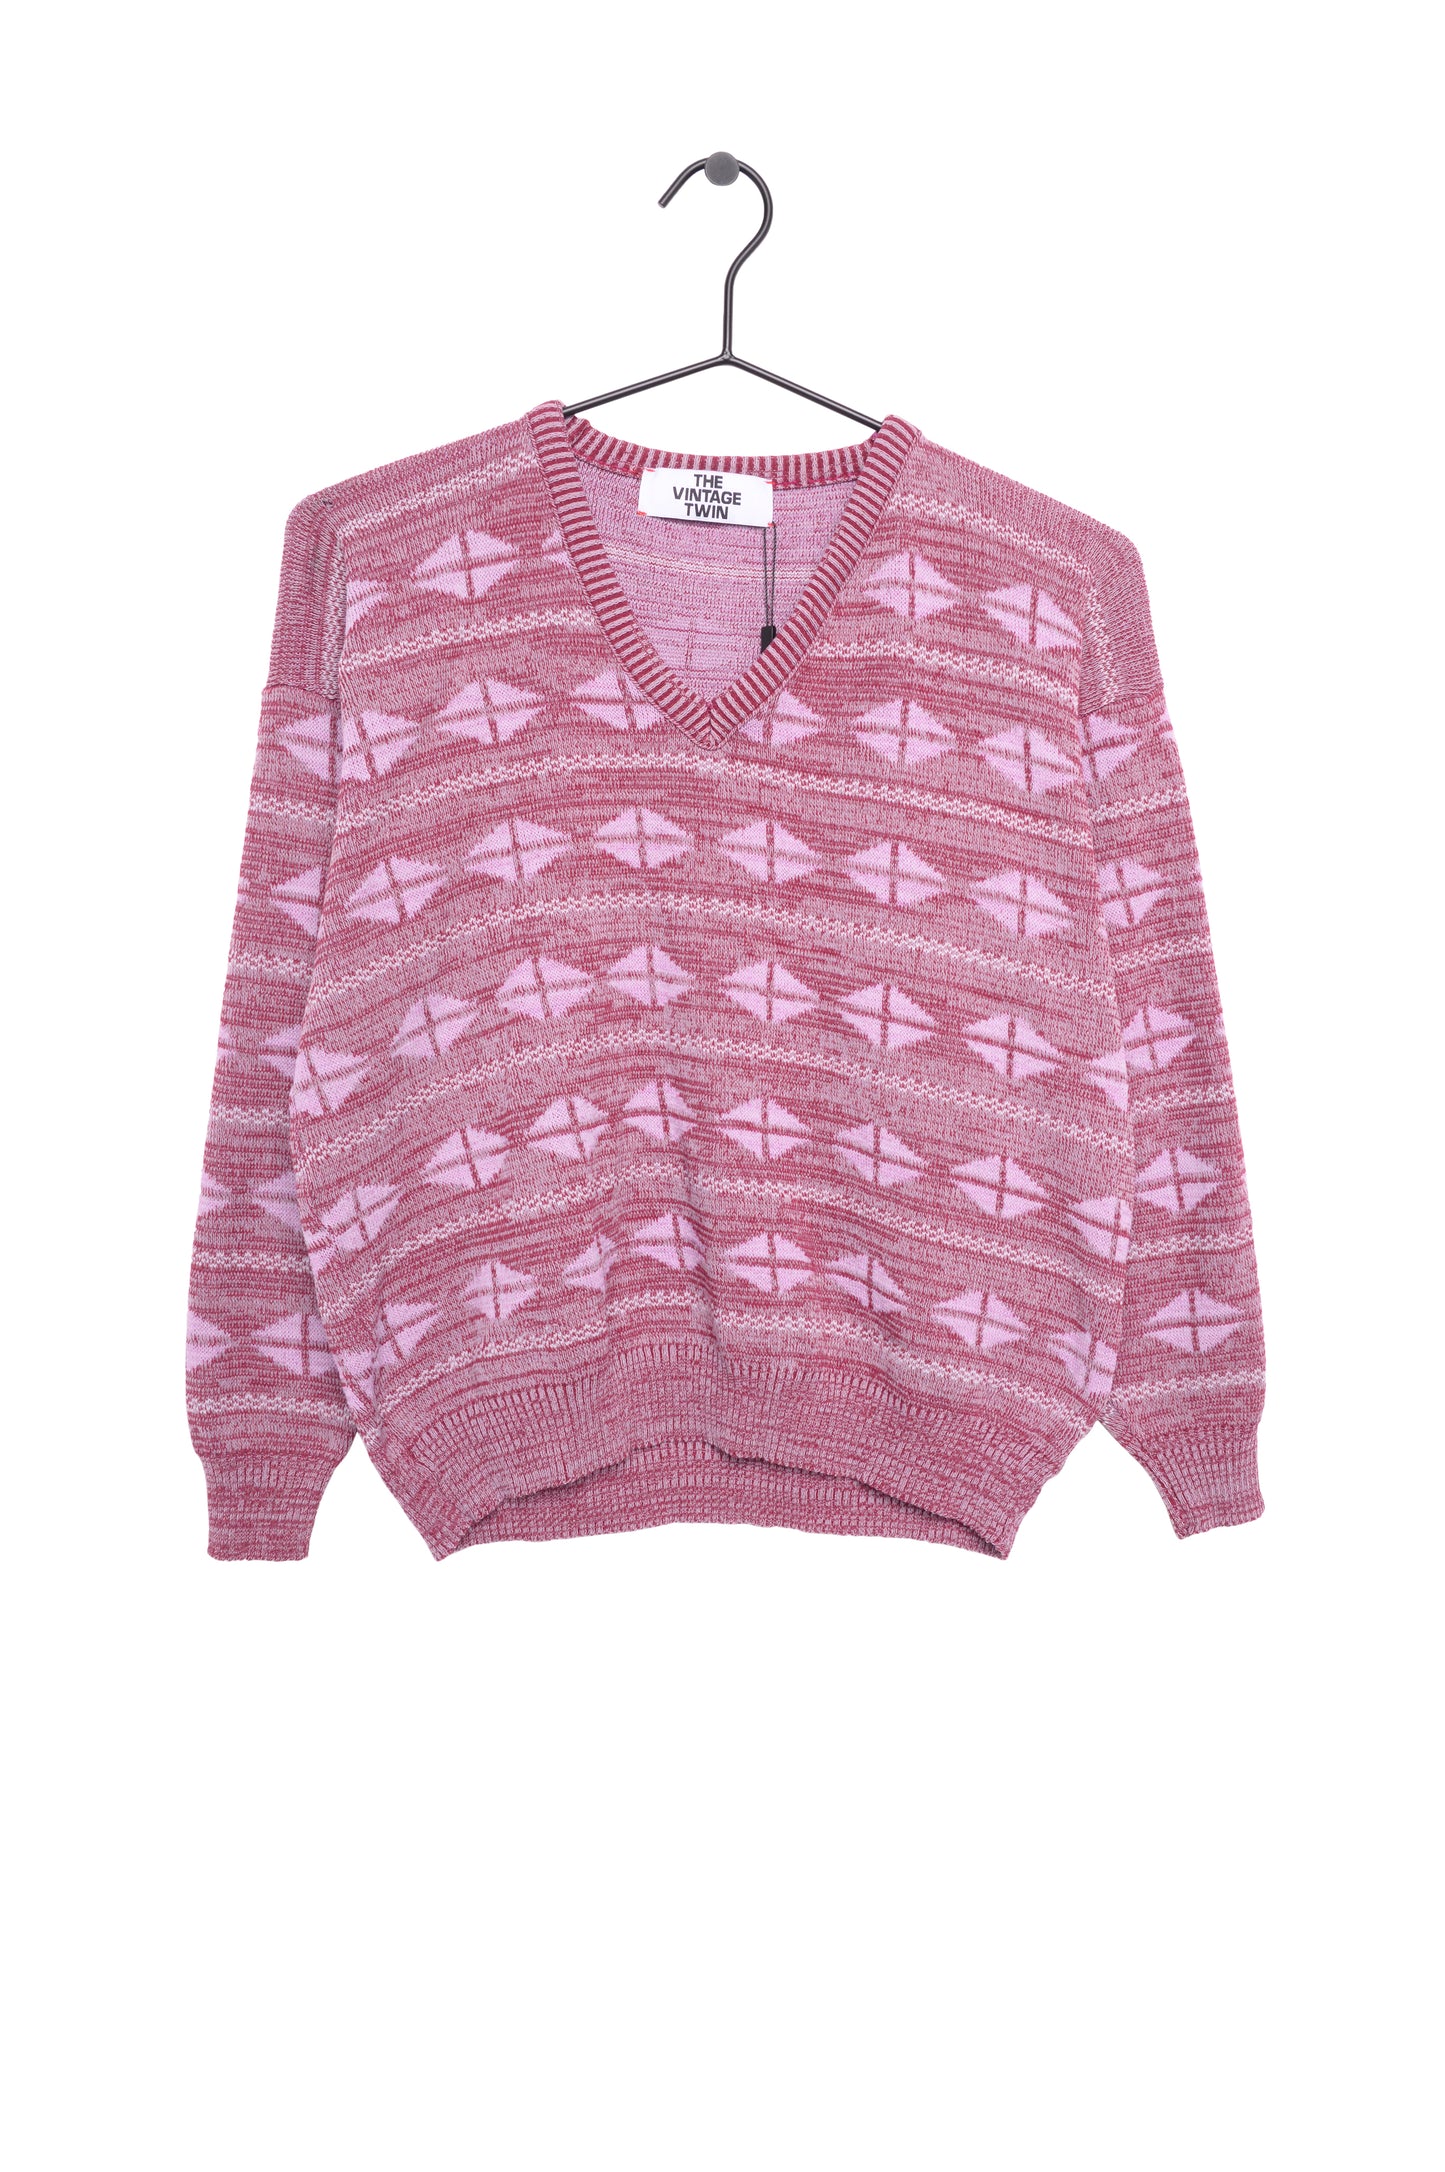 1980s Geometric Sweater USA